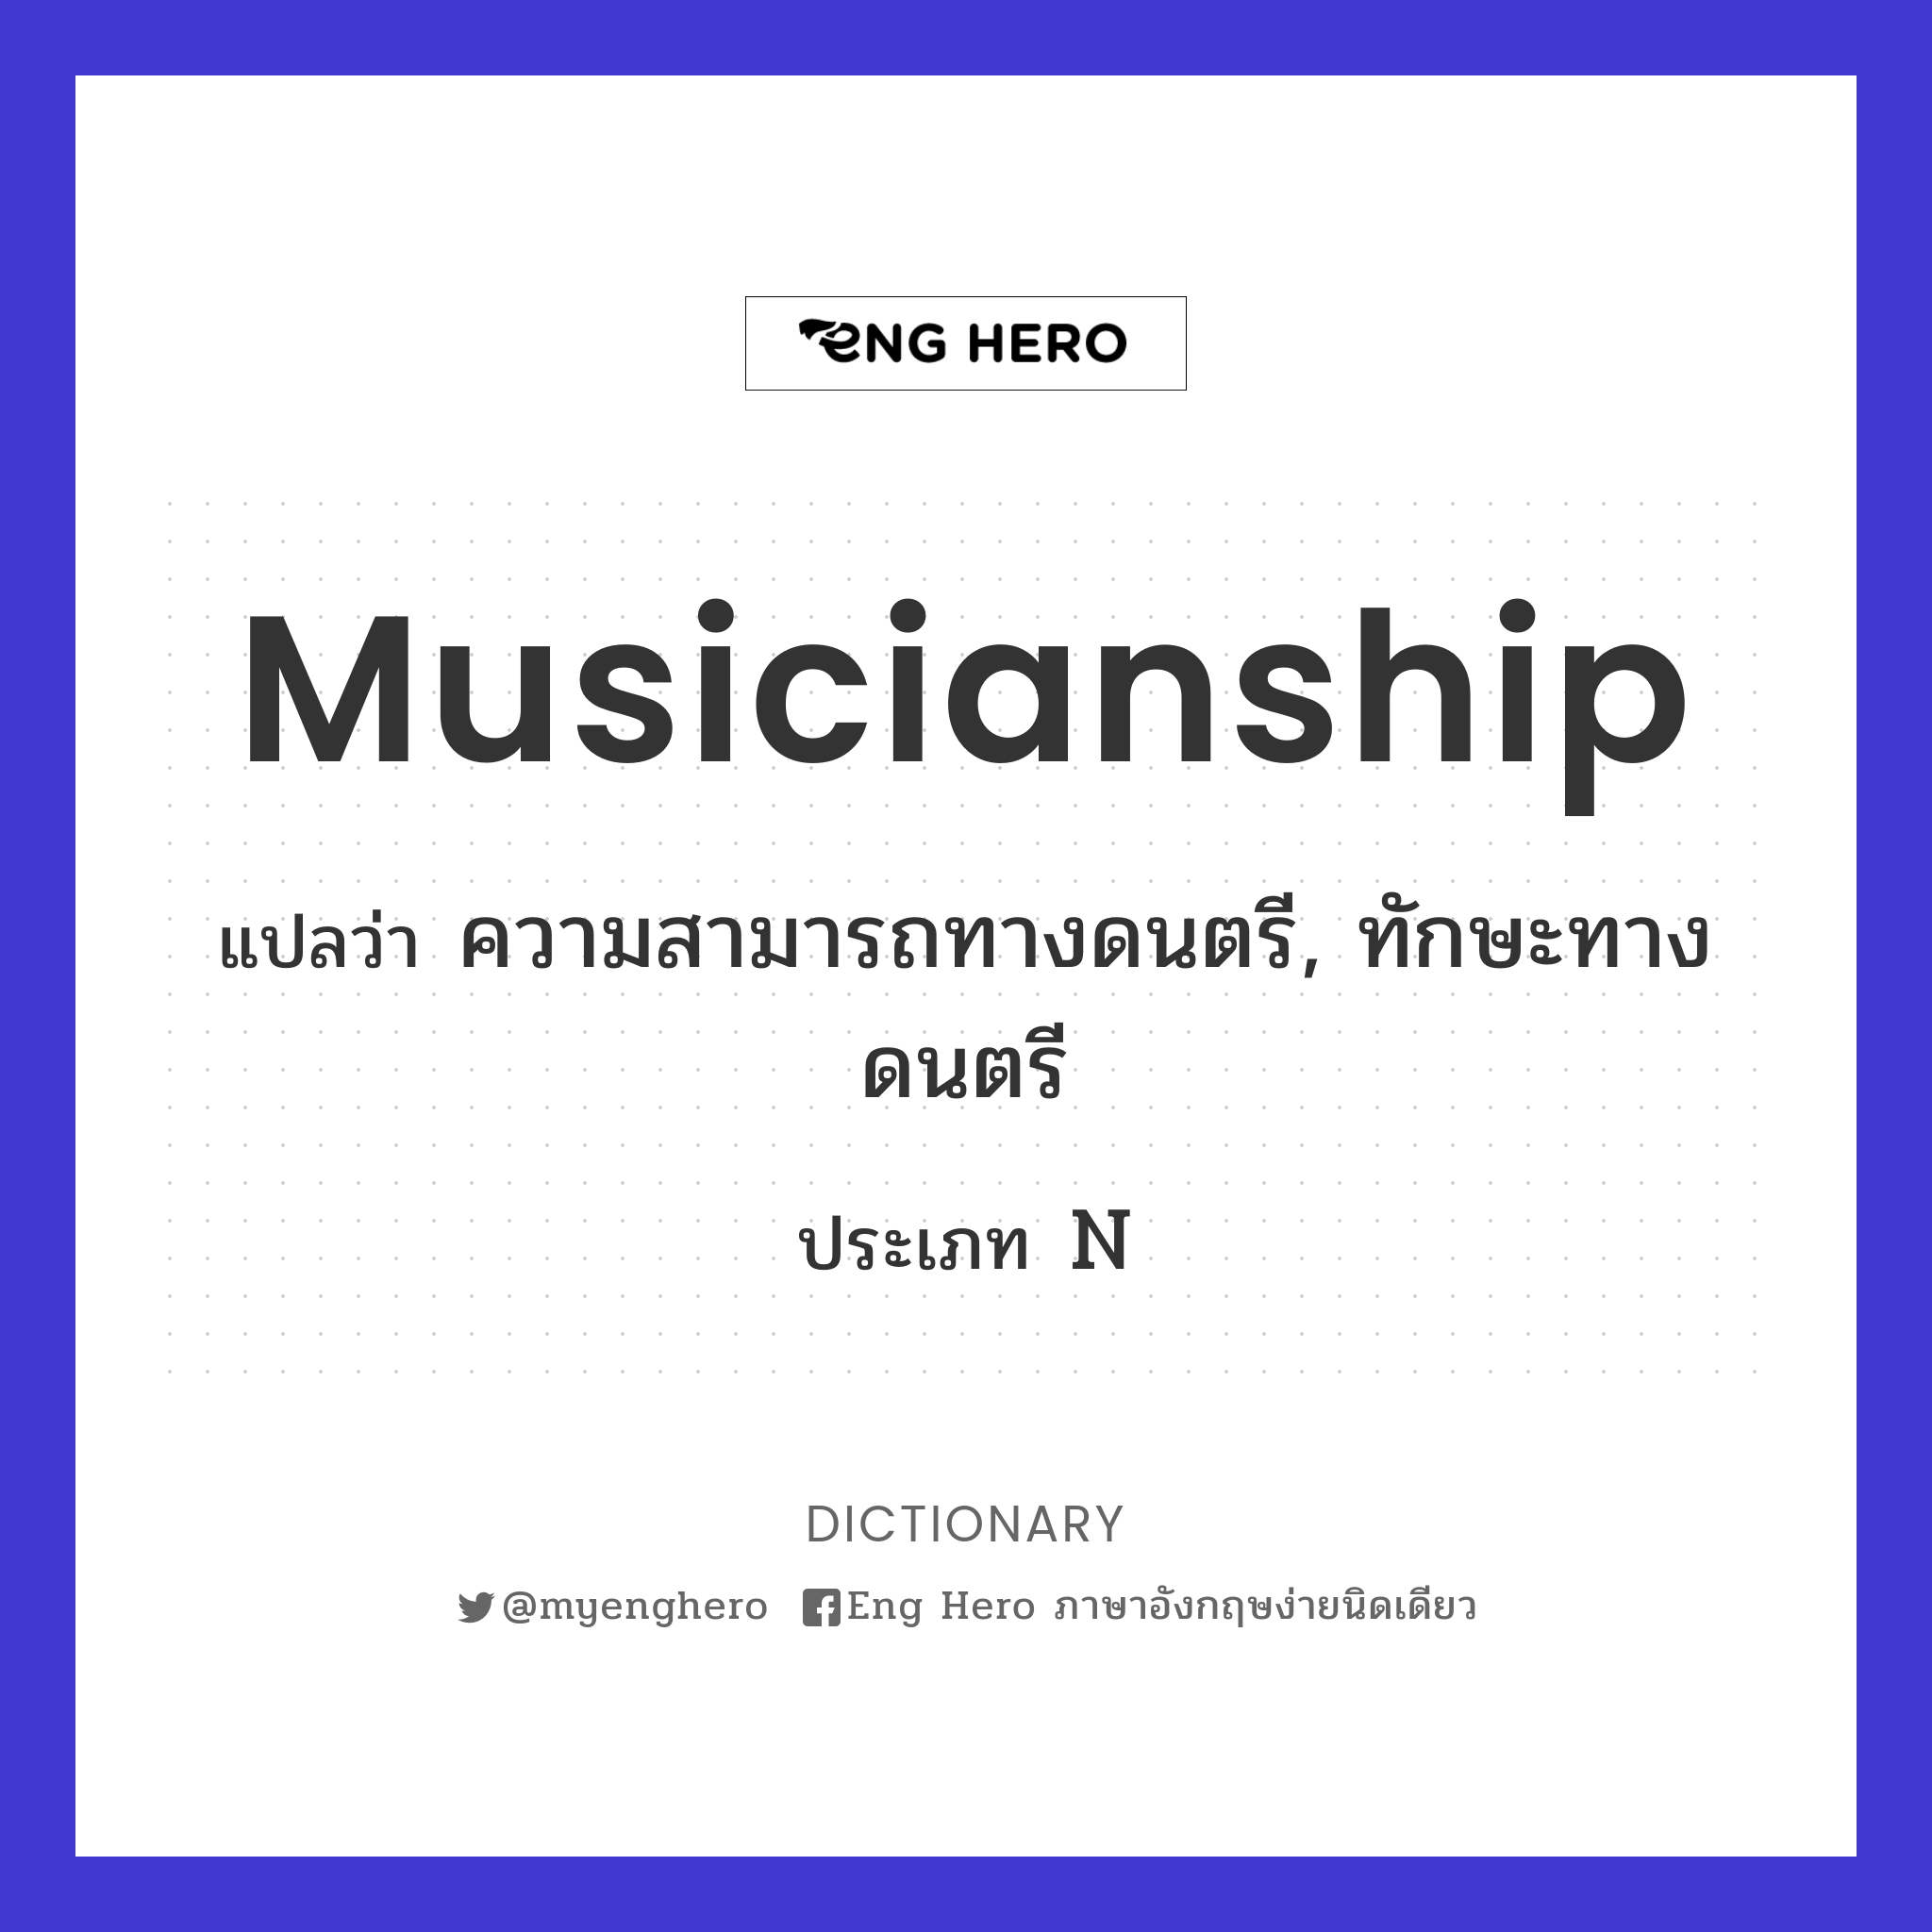 musicianship